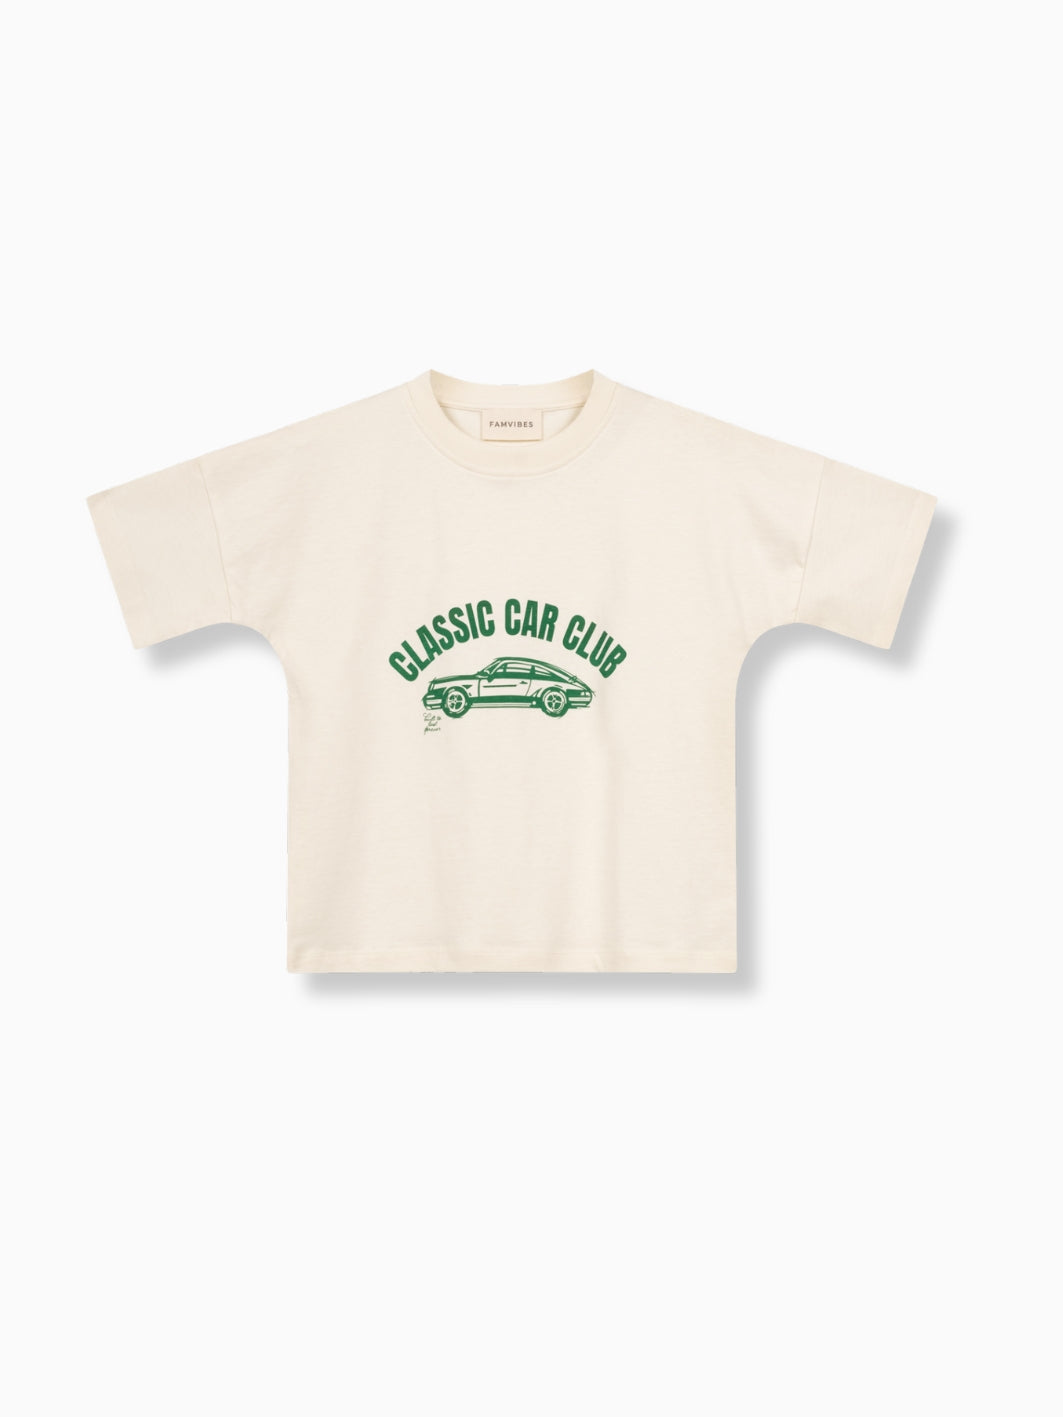 CLASSIC CAR CLUB Shirt Kids - FAMVIBES 